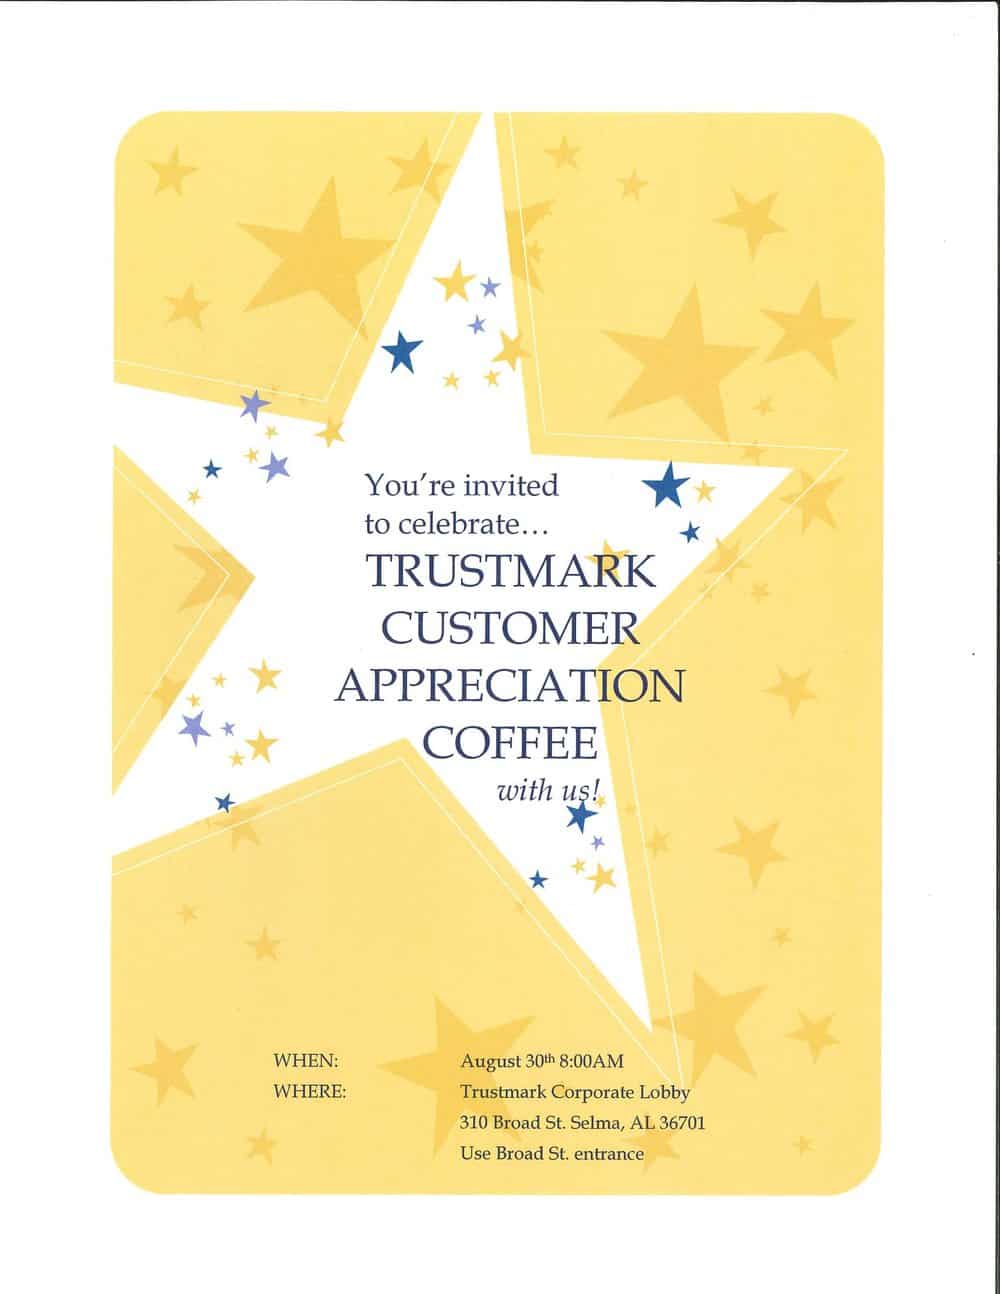 Trustmark Customer Appreciation Coffee.jpg